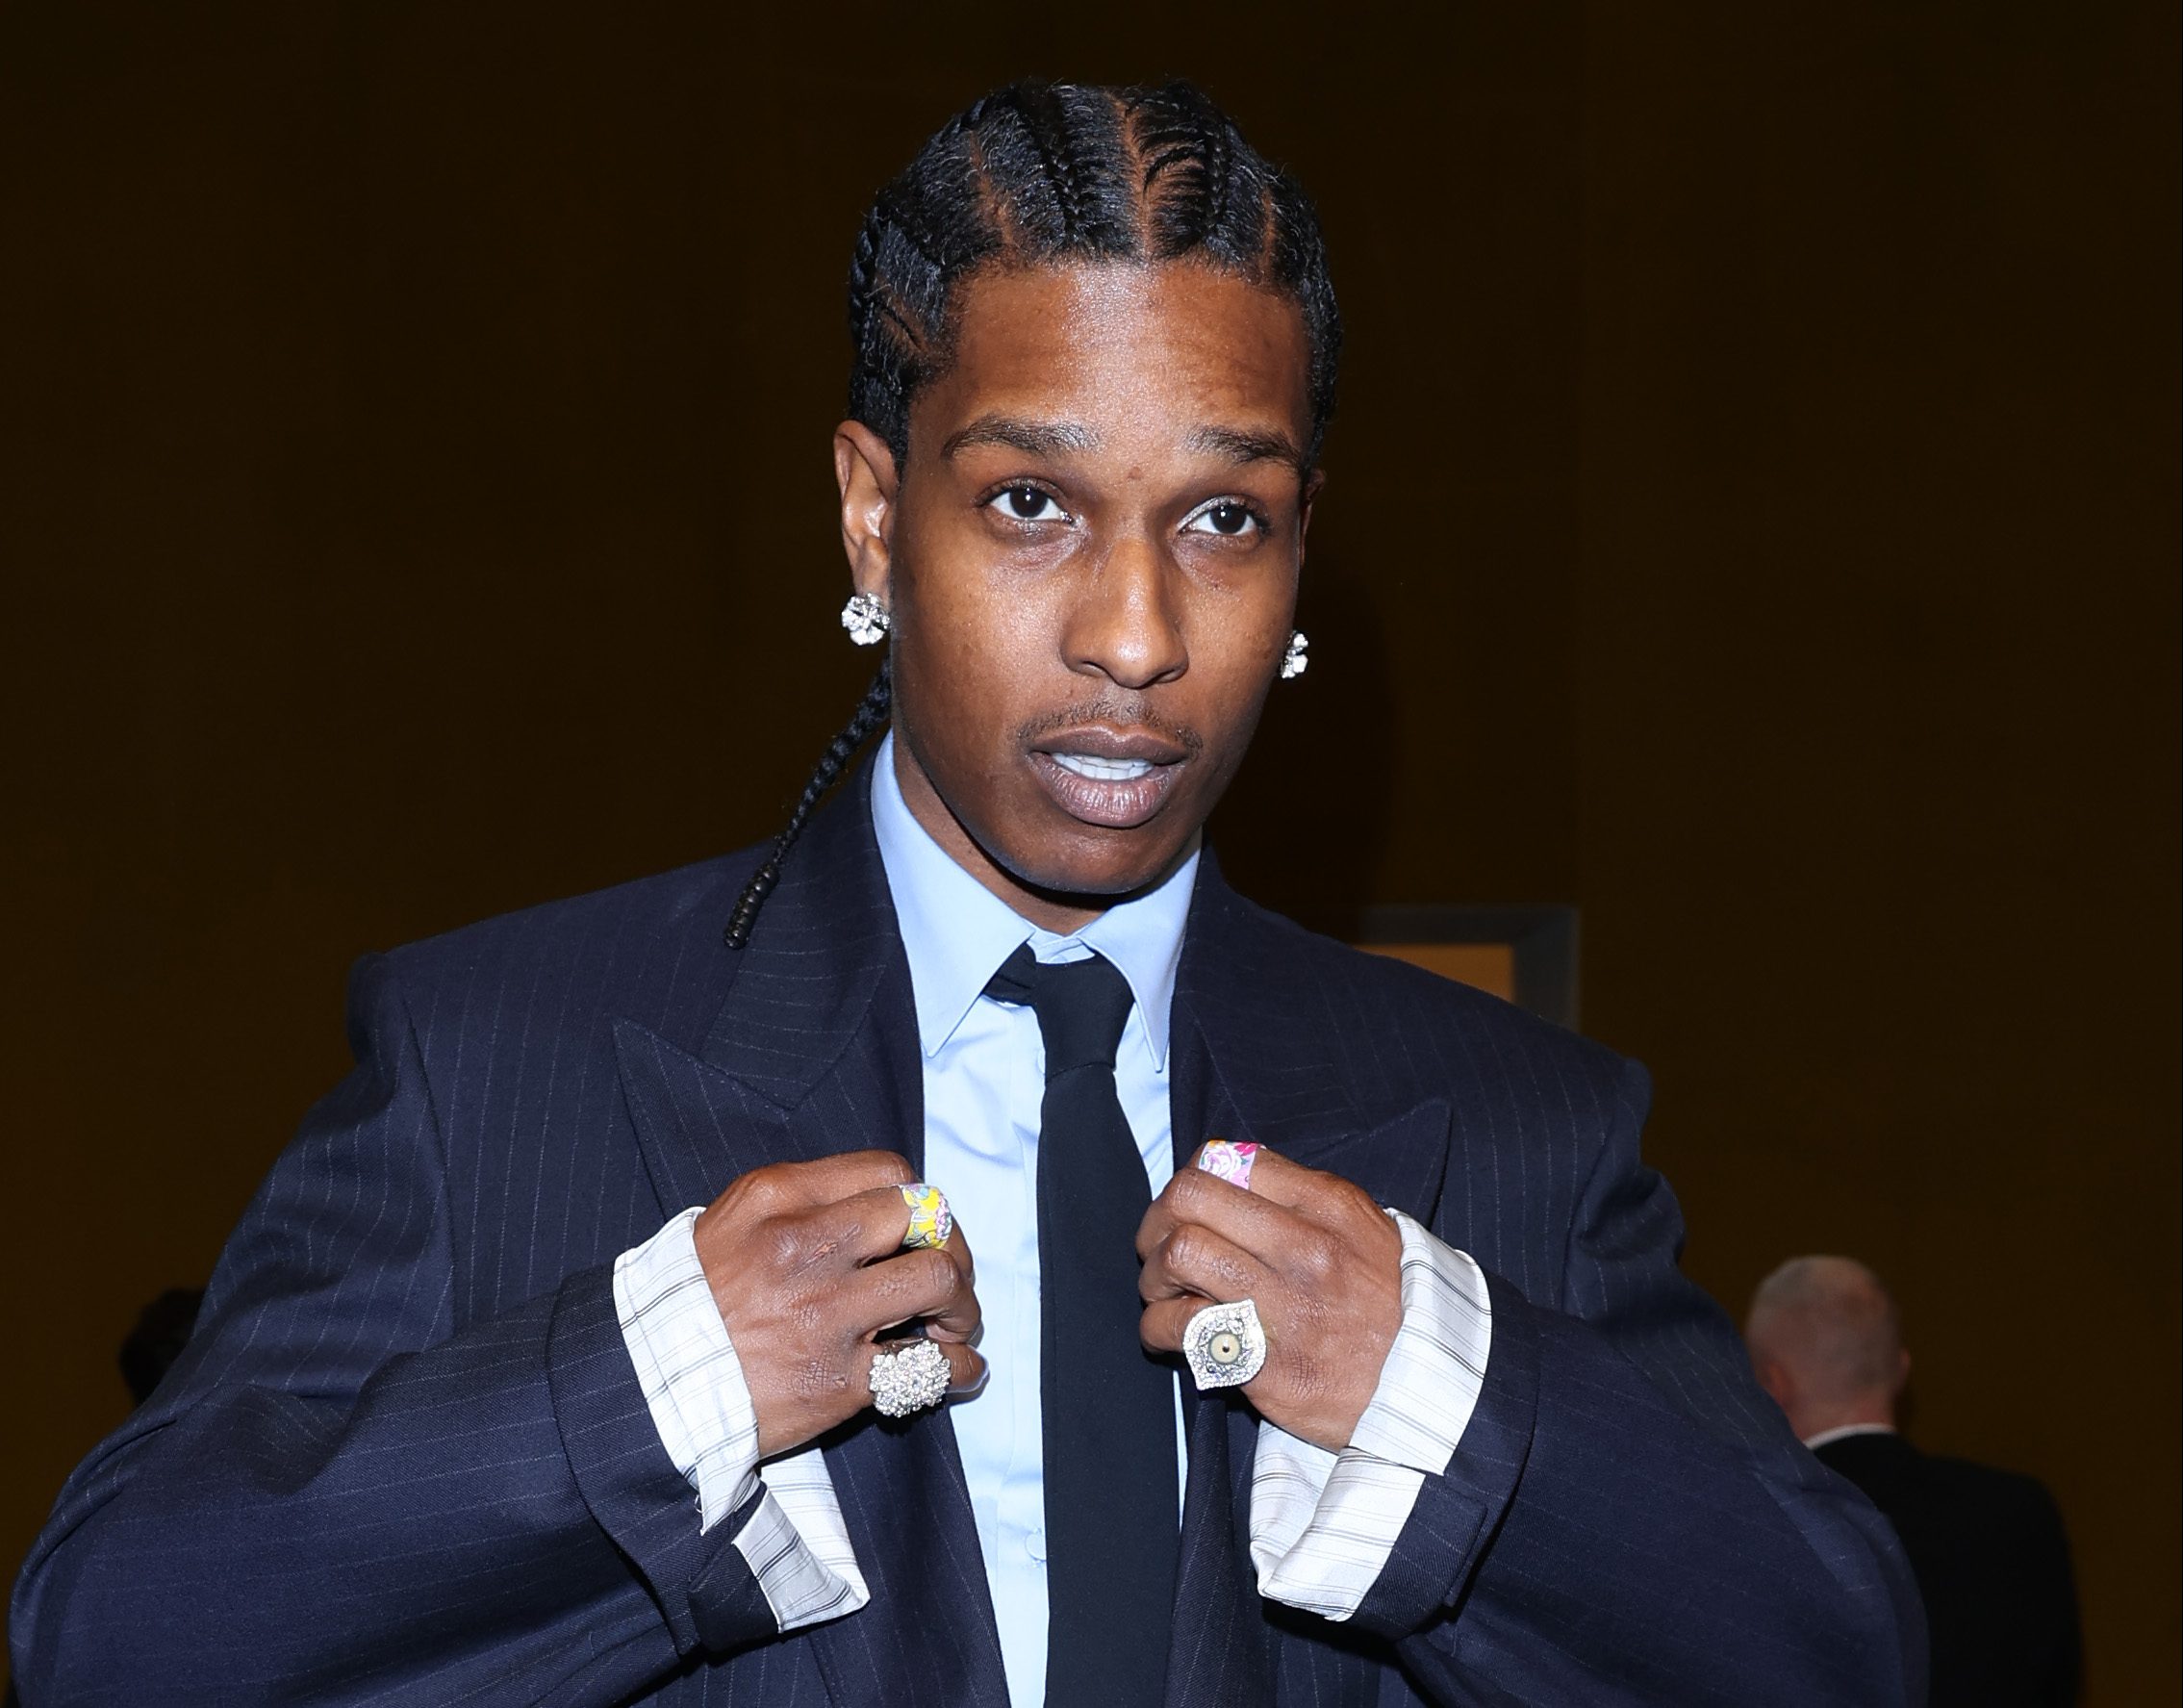 ASAP Rocky Has Gucci Logo Braided Into His Hair